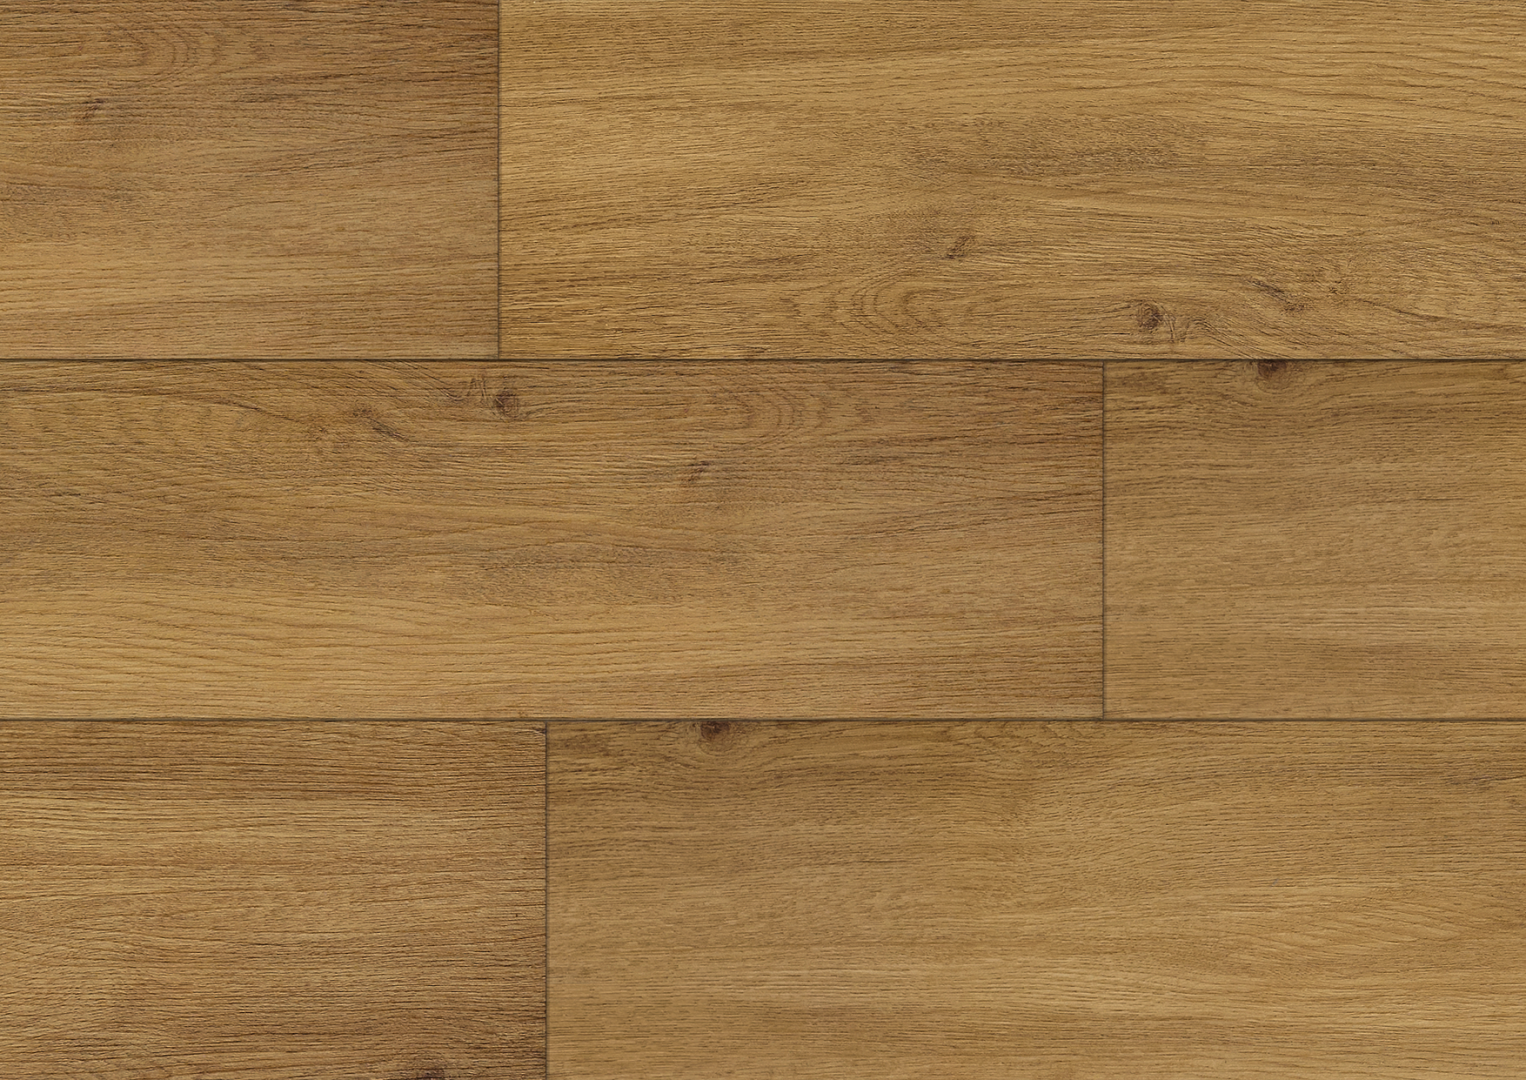 Minerální podlaha Dub Georgetown - titanium nano layer, uv vrstva, design dřeva